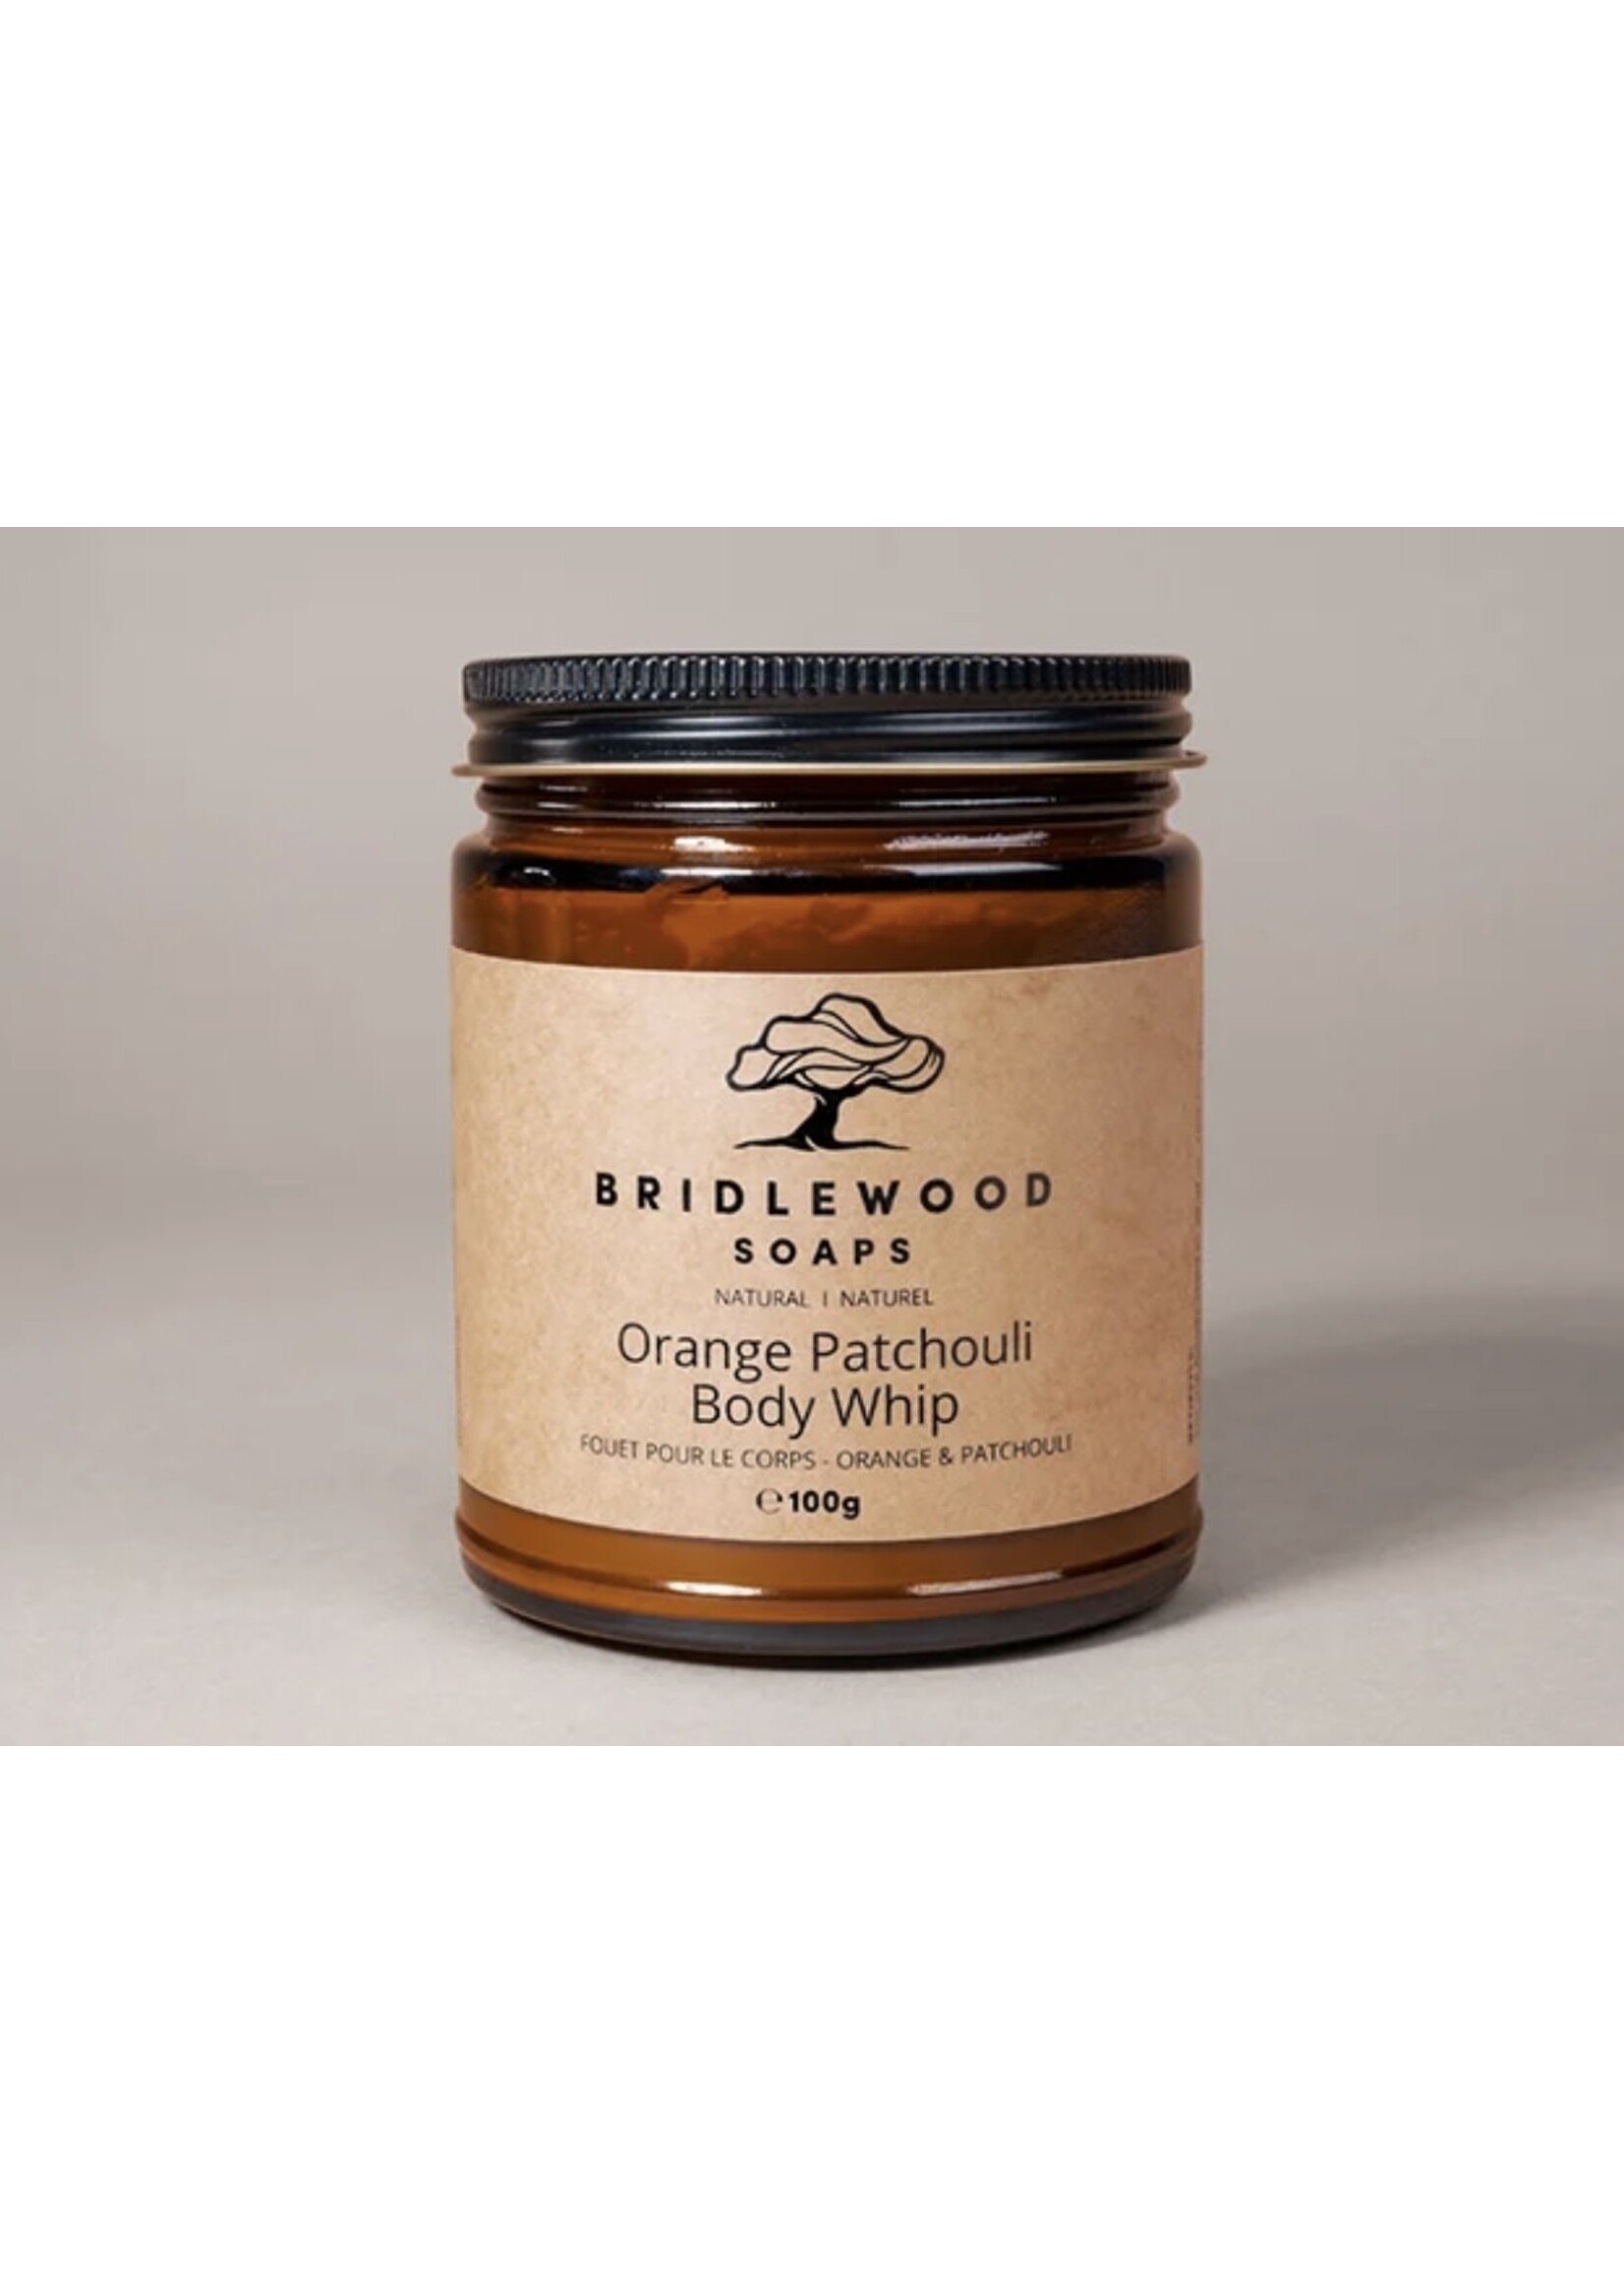 Bridlewood Soaps Orange Patchouli Body Whip